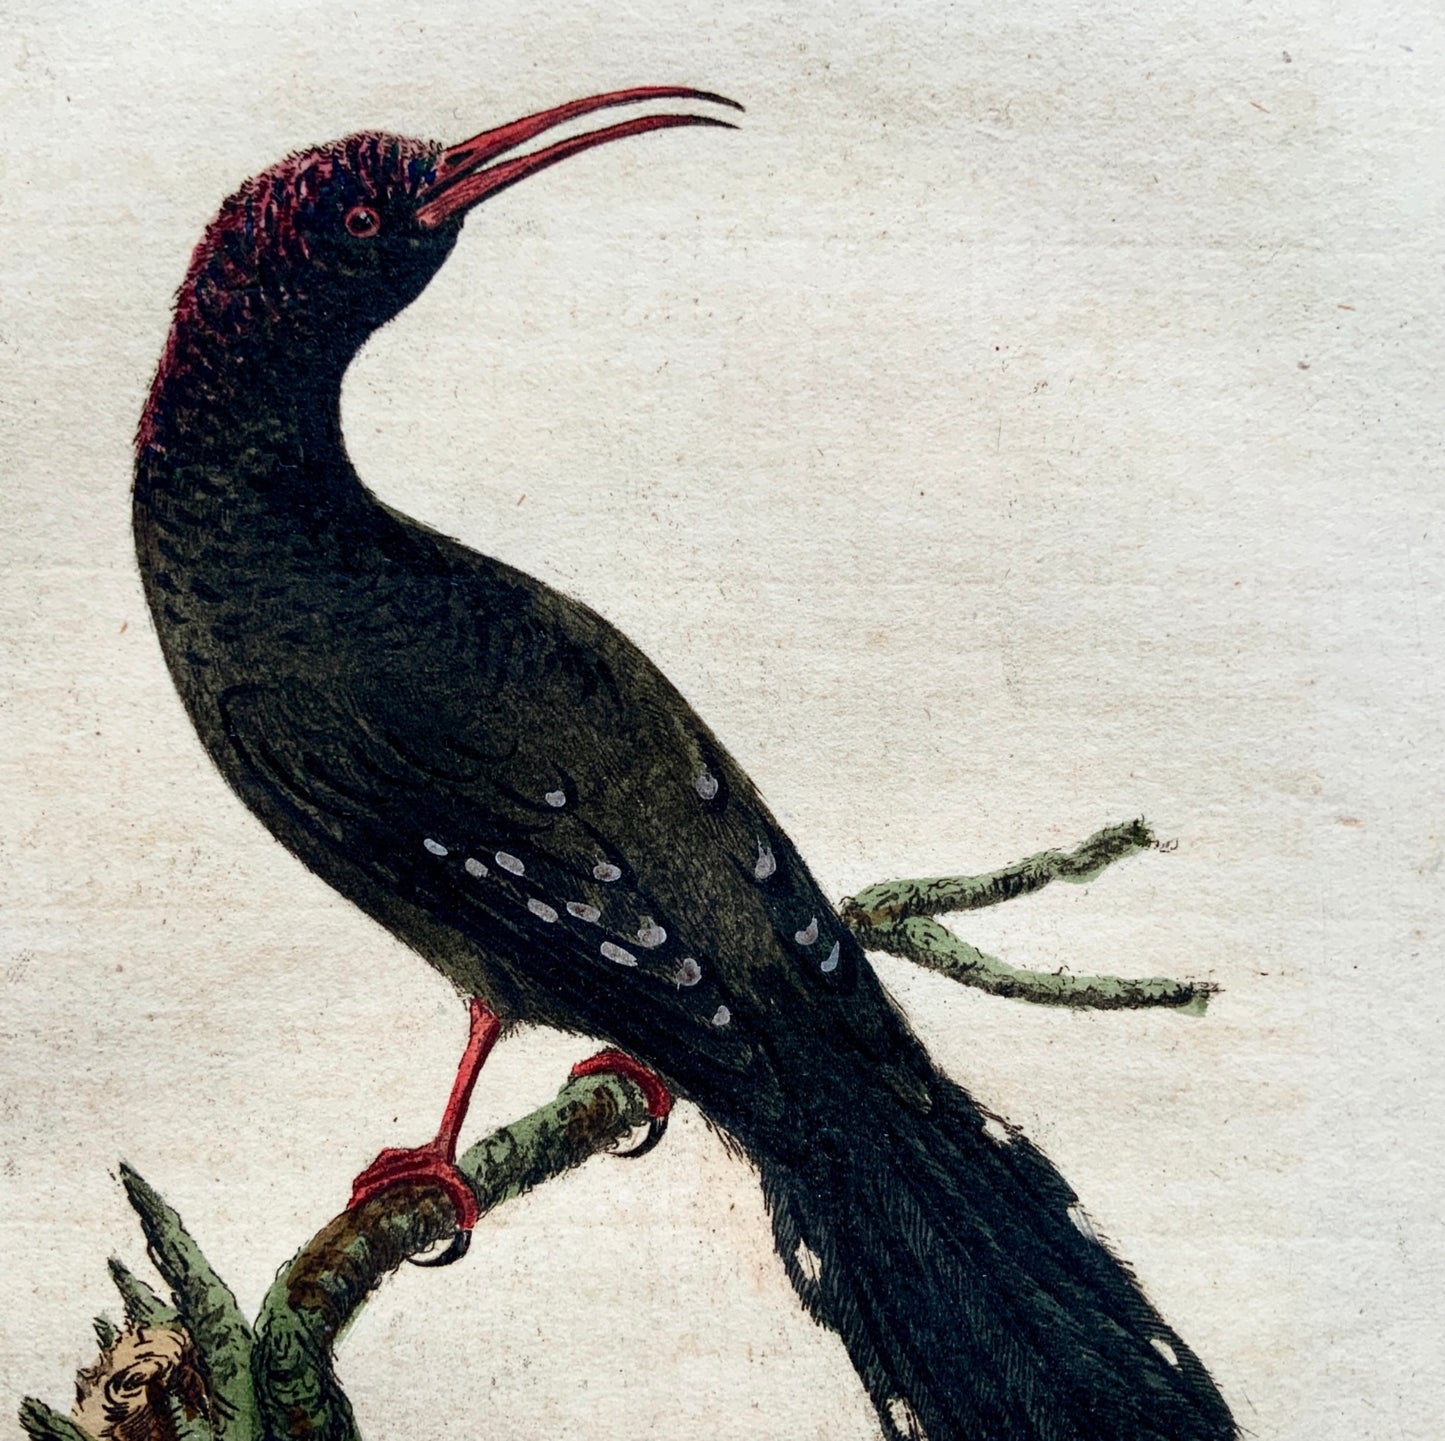 1785 John Latham - Synopsis - Red Billed PROMEROPS Ornithology - hand coloured